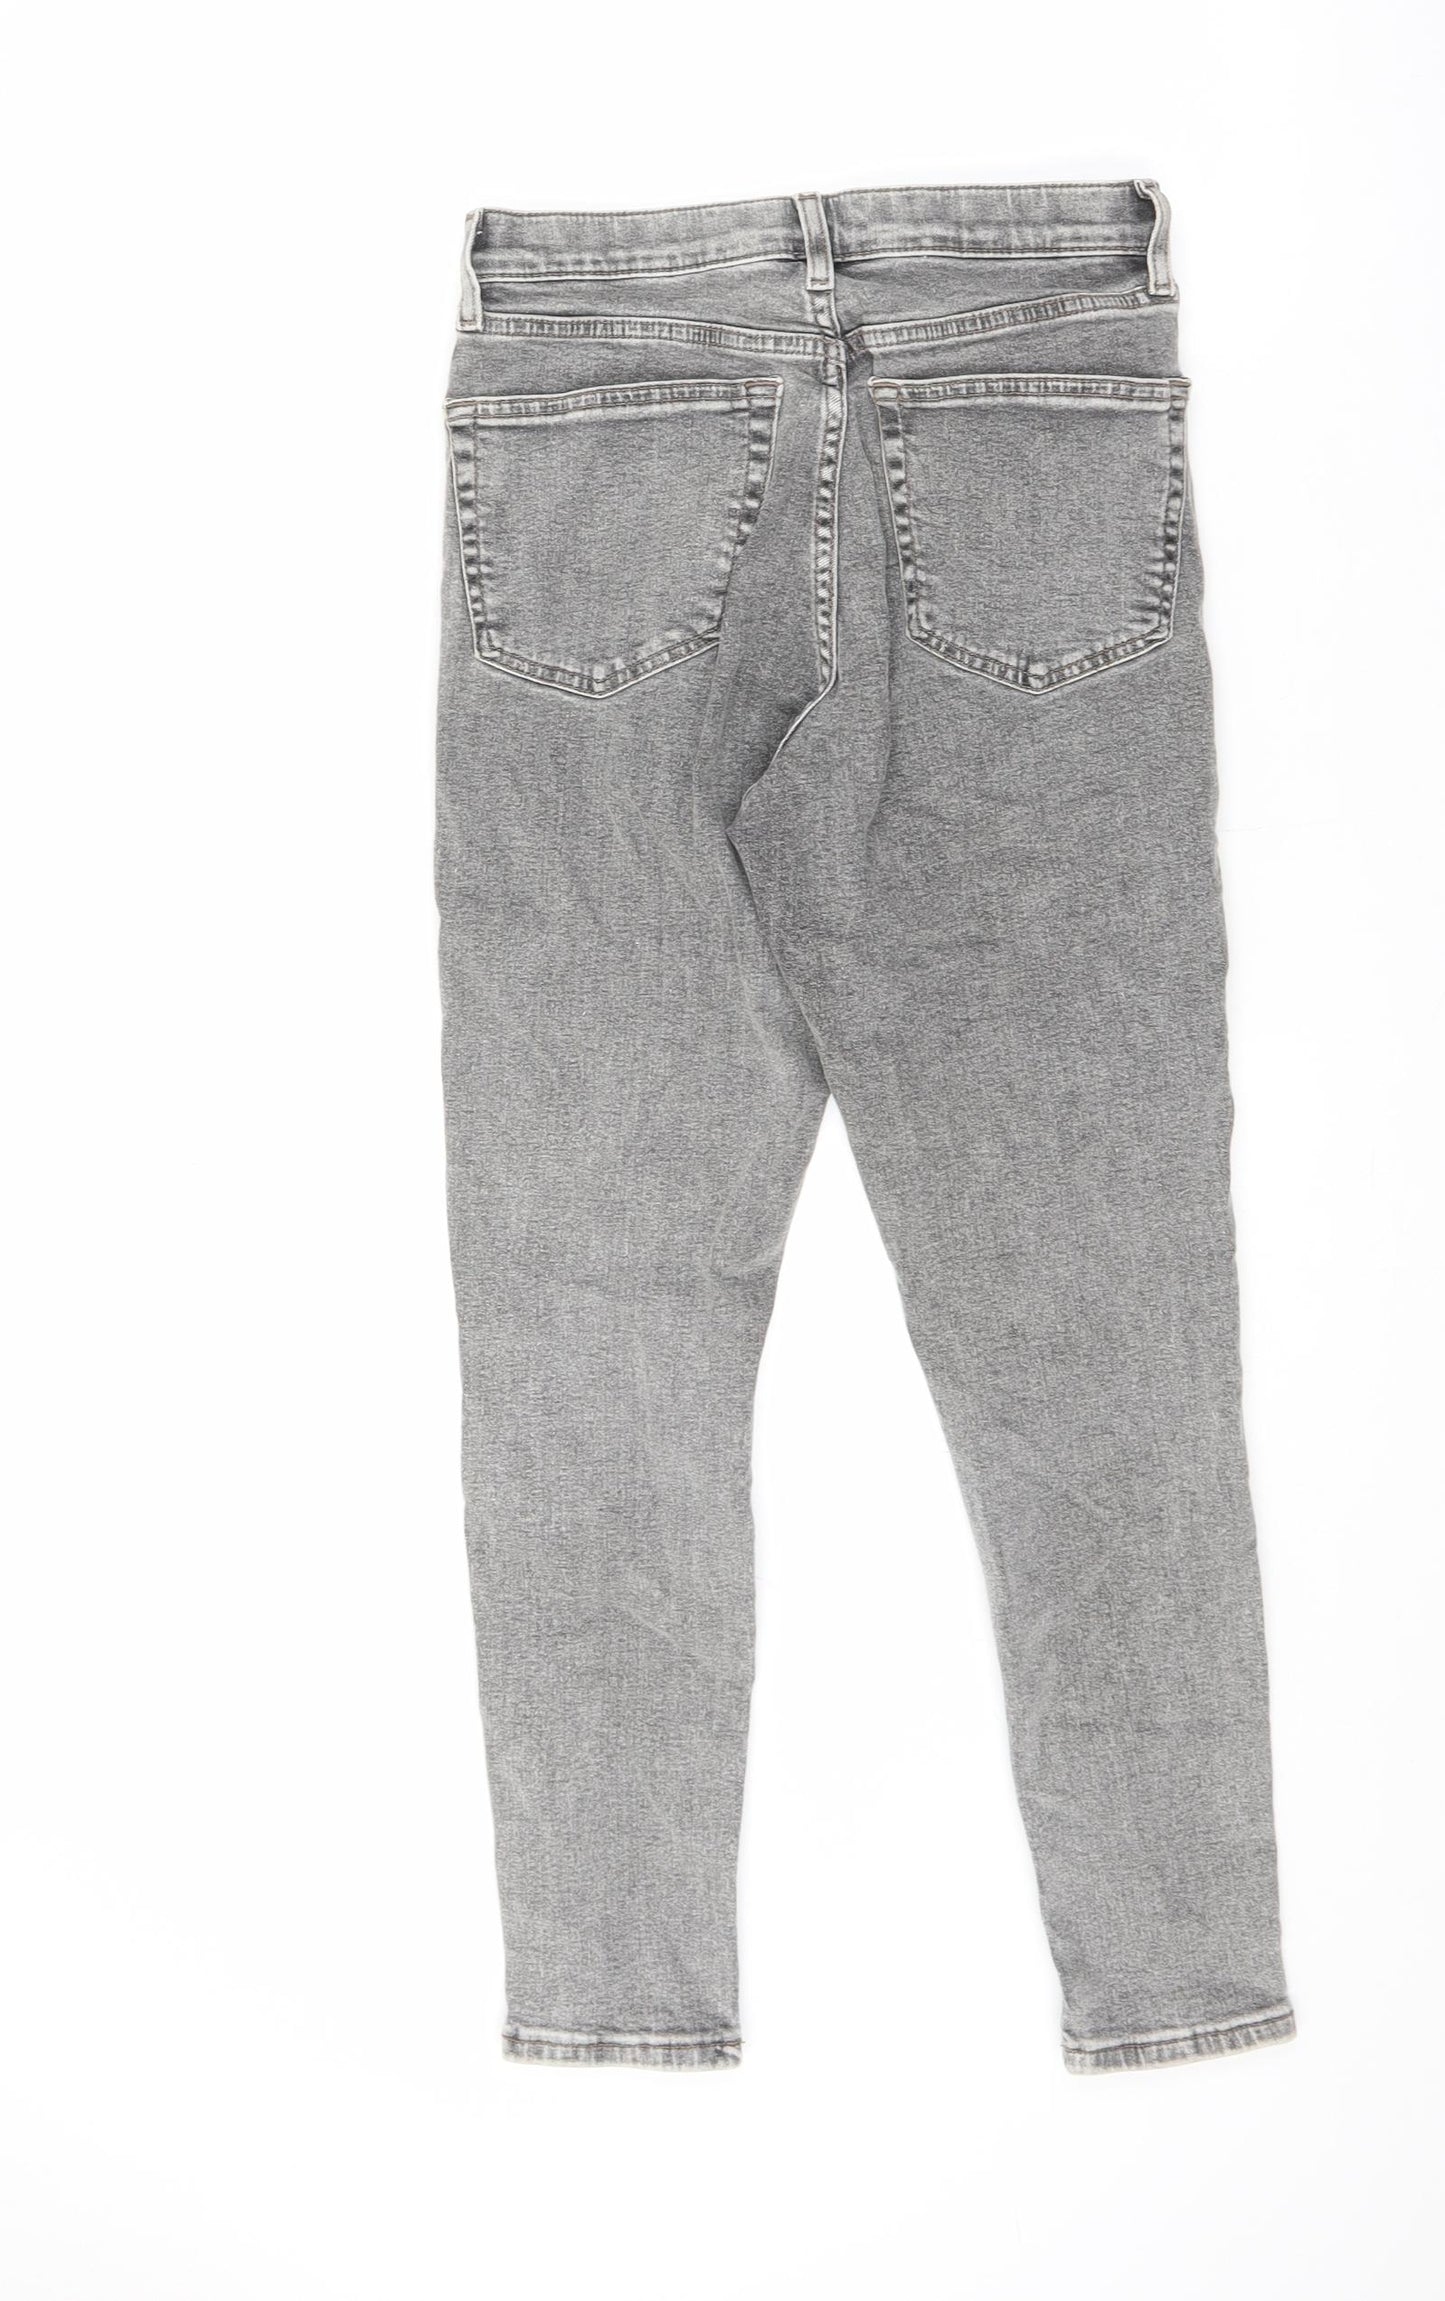 Topshop Womens Grey Cotton Skinny Jeans Size 28 in L30 in Regular Zip